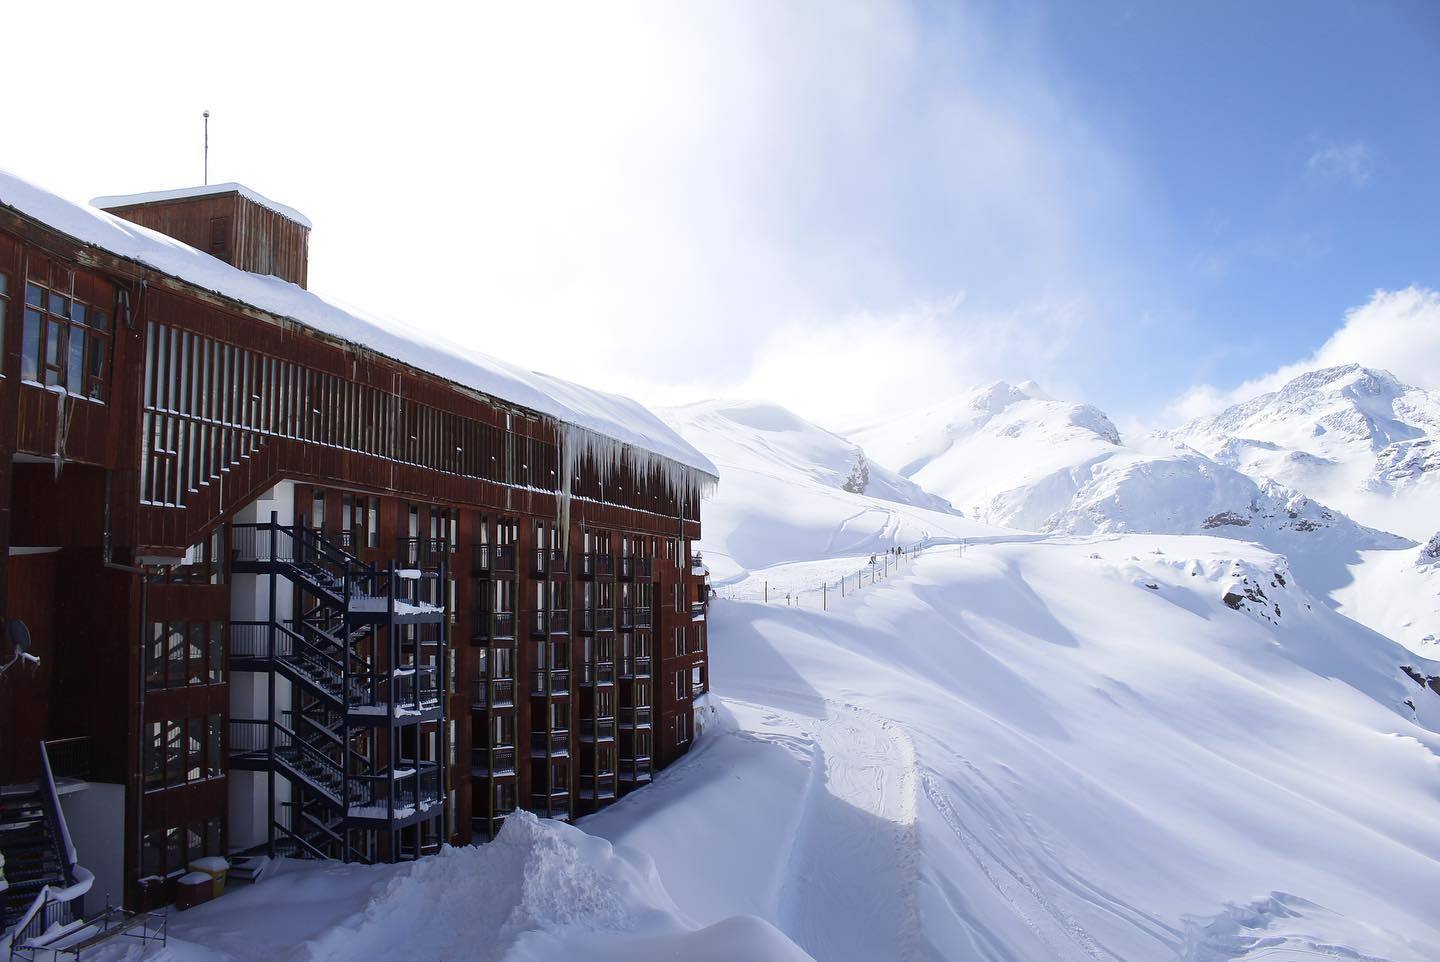 Chile está registrando su mejor temporada de esquí de la última década -  Noticias - Nevasport.com